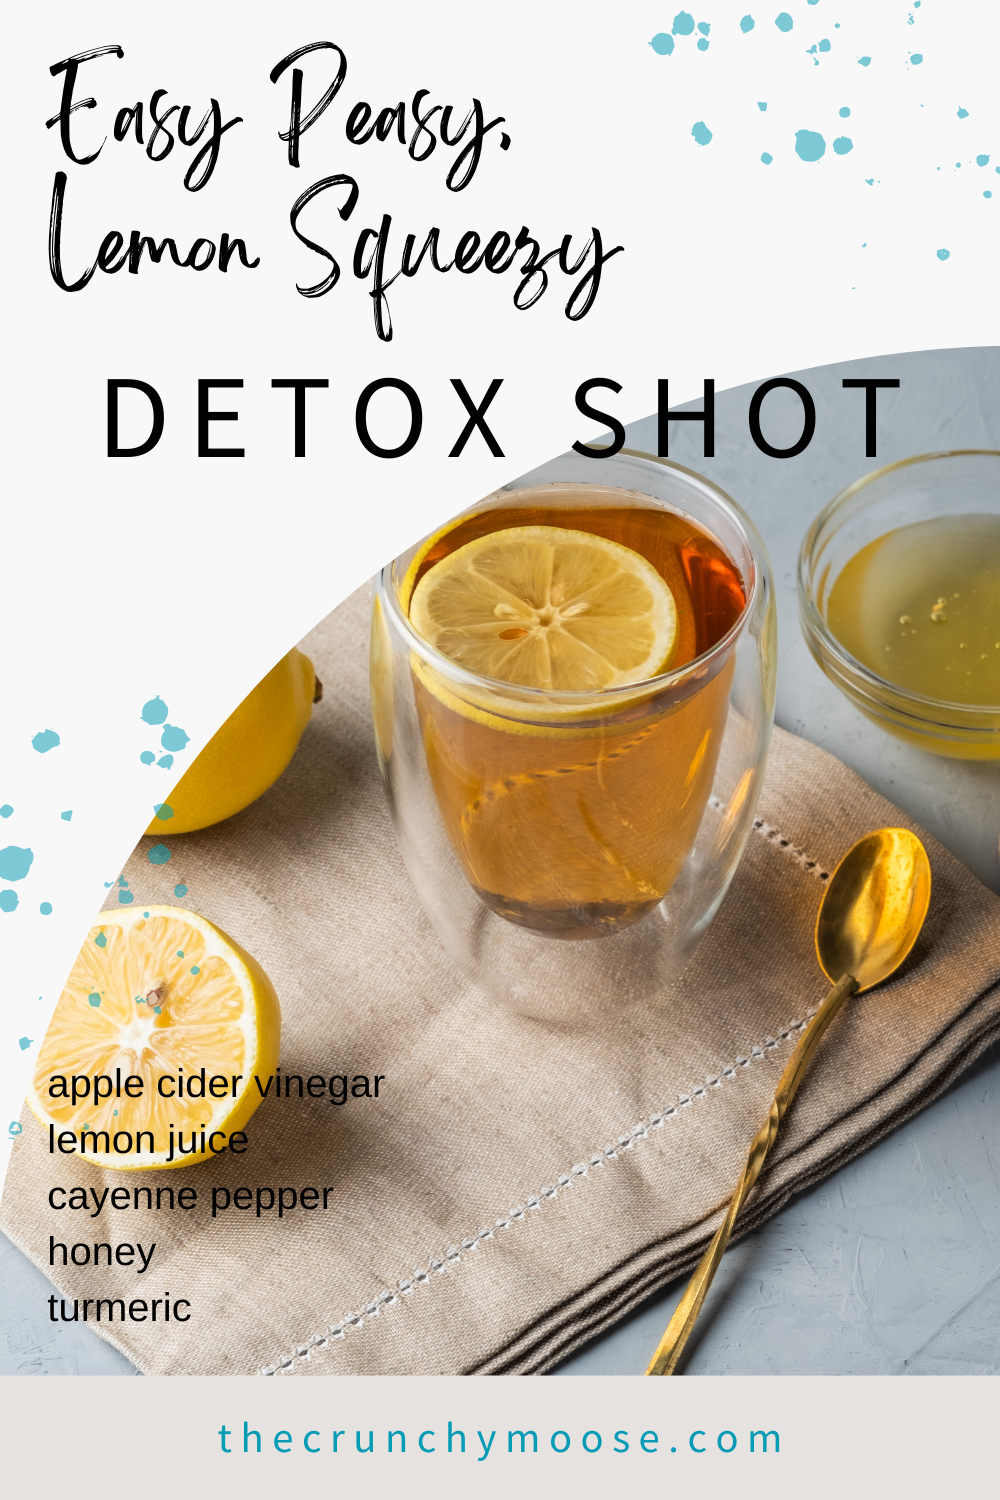 master cleanse shot with apple cider vinegar, lemon juice, cayenne pepper, honey